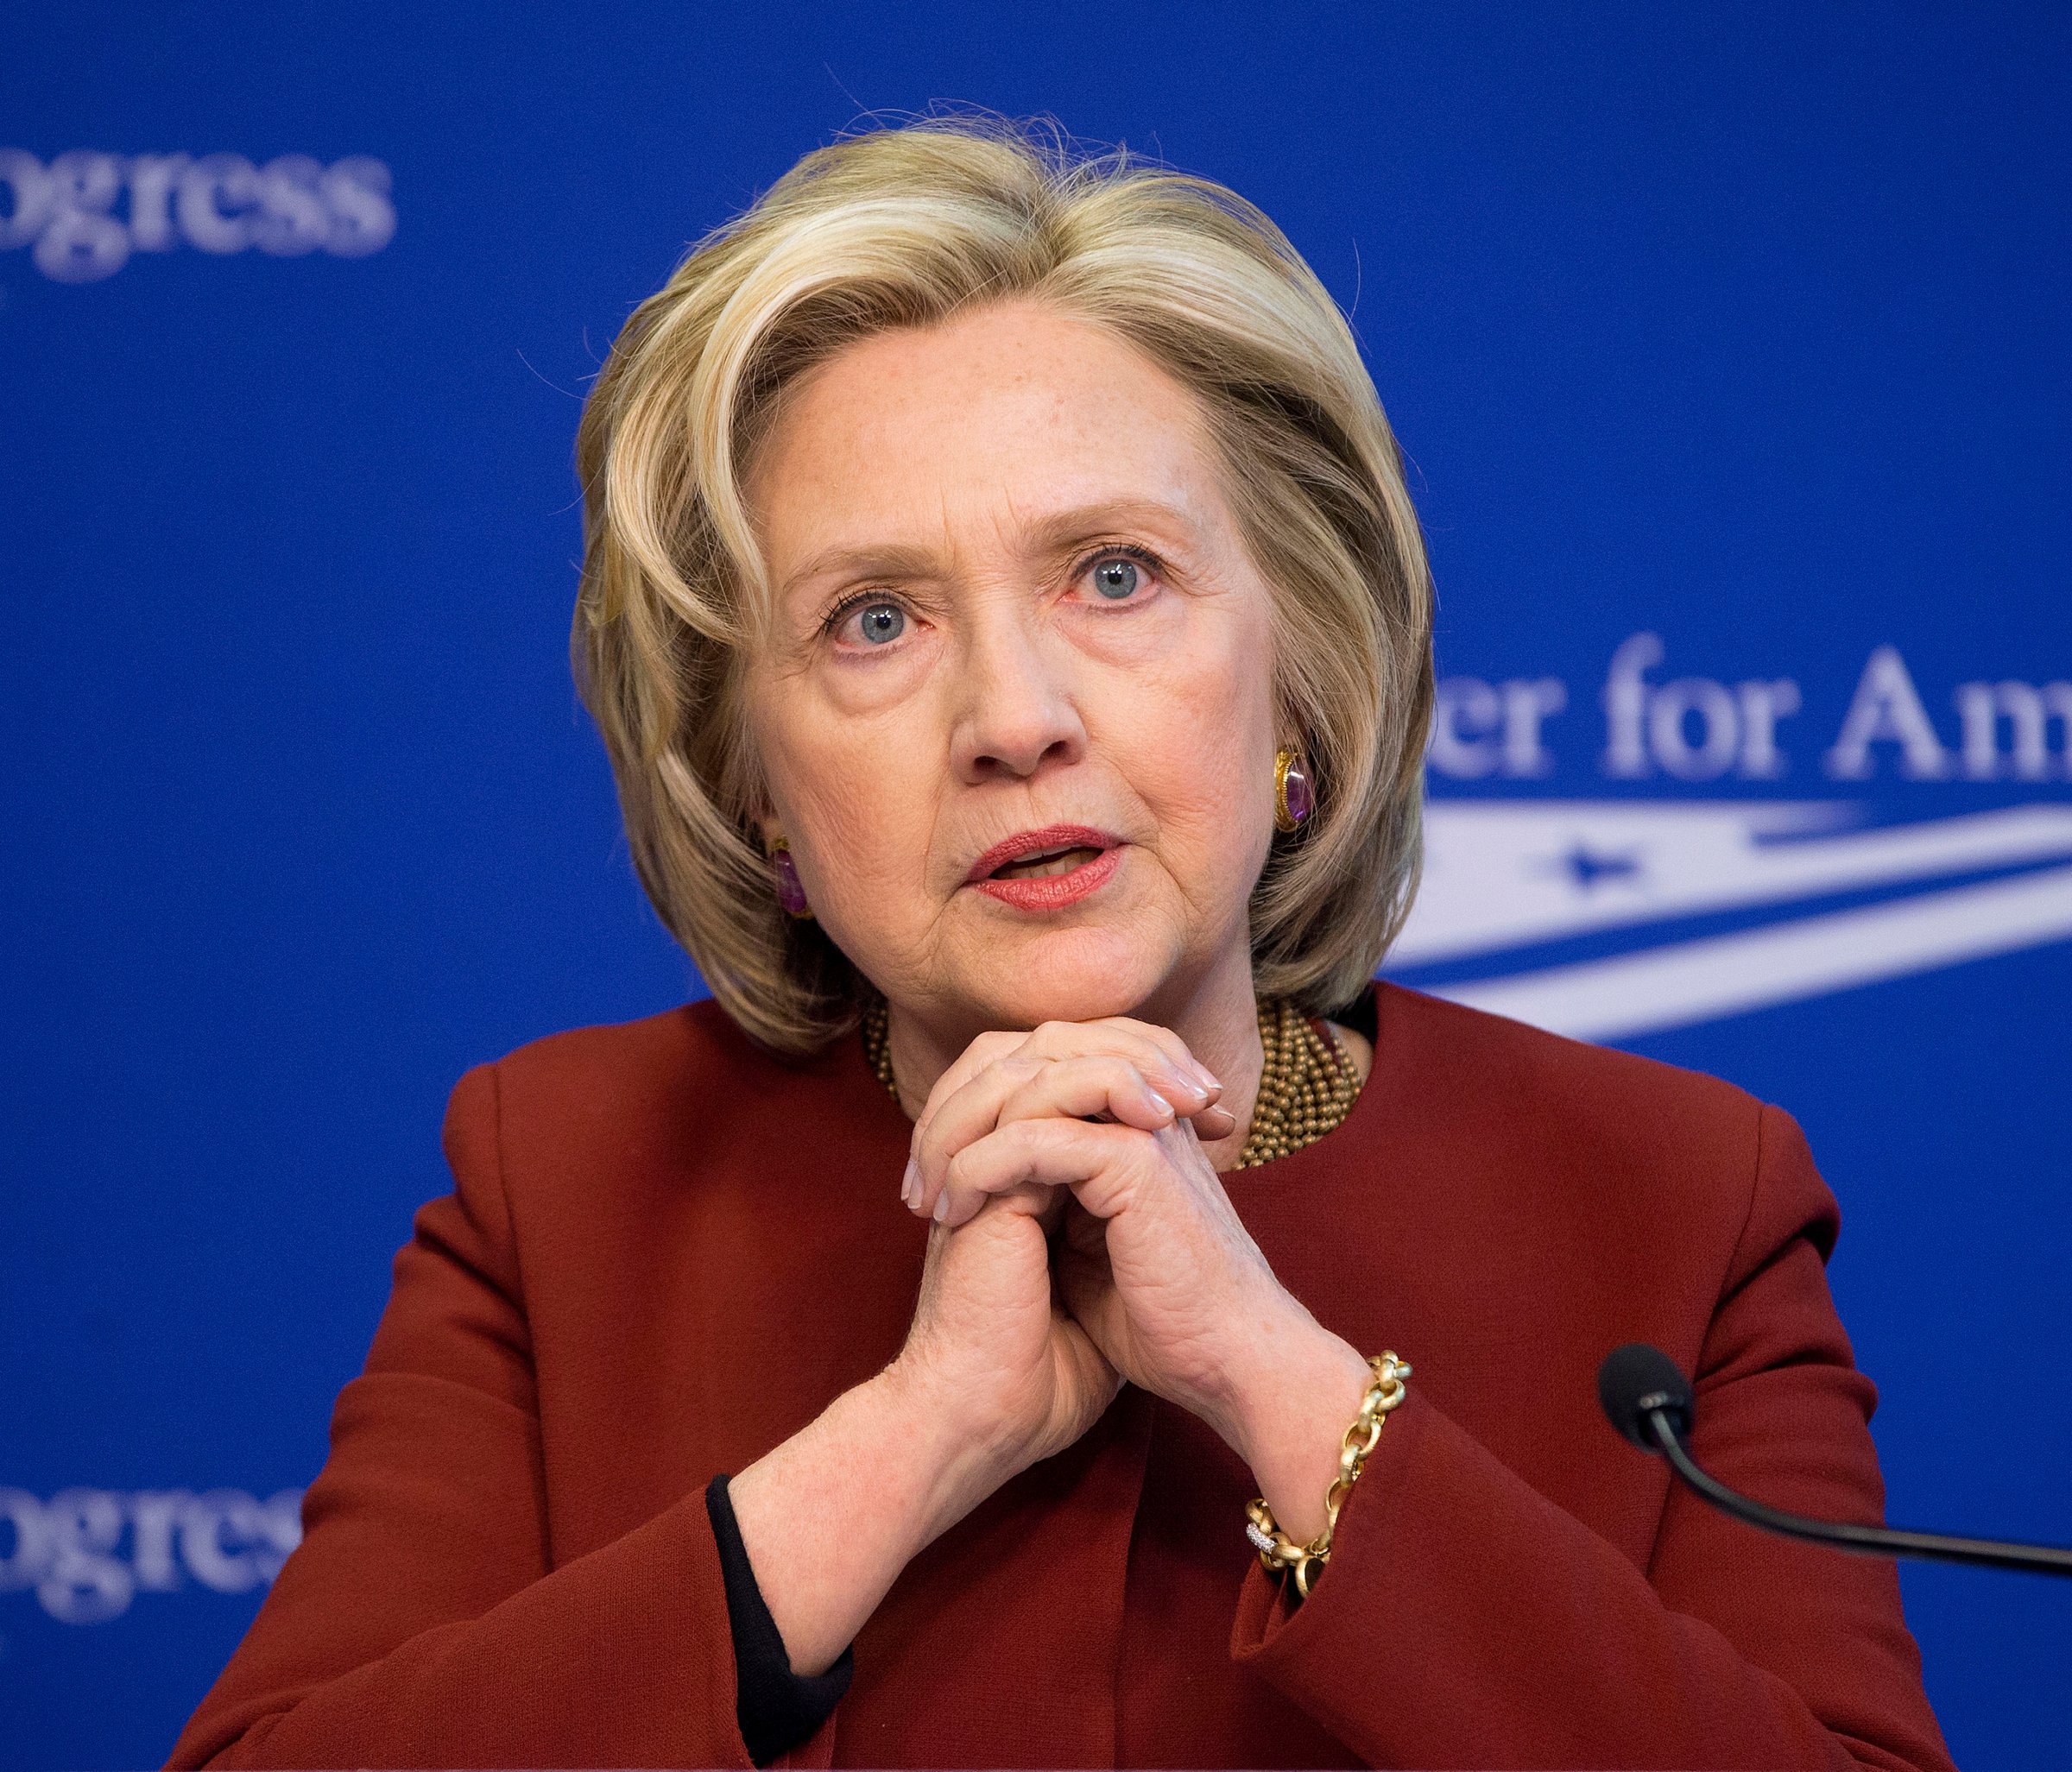 Former Secretary of State Hillary Rodham Clinton speaking Washington, D.C. on March 23, 2015.